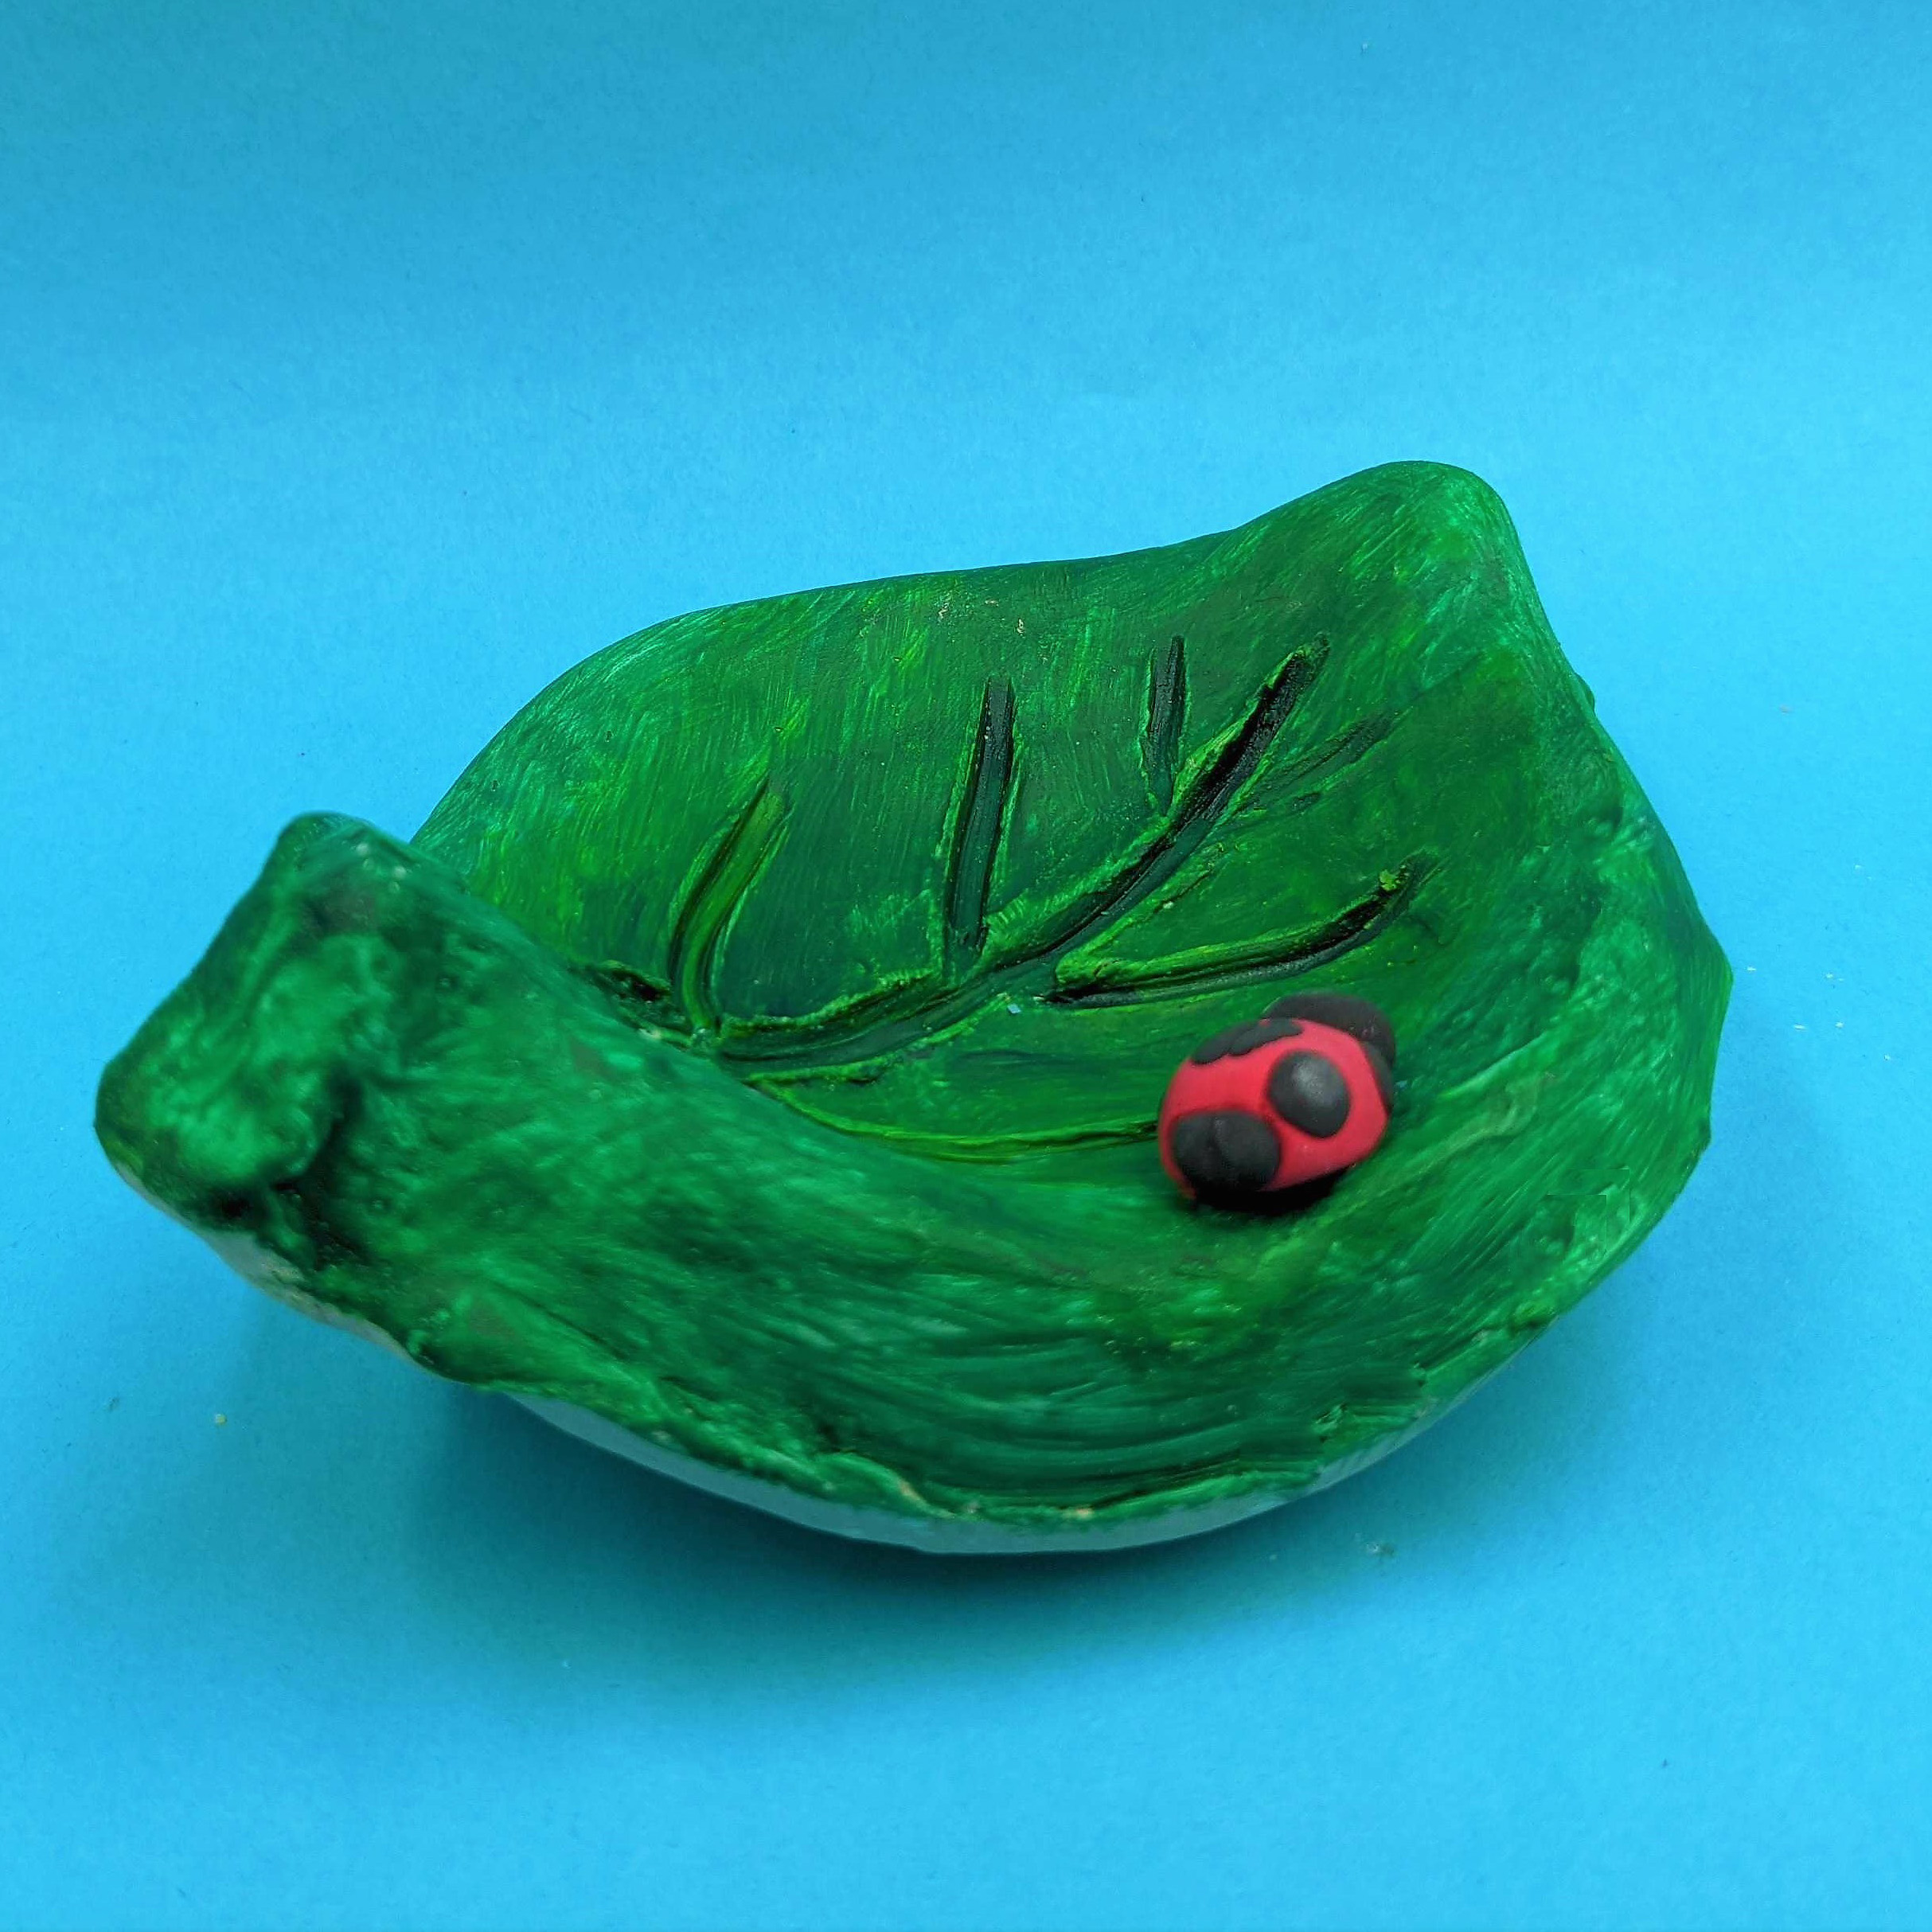 Kidcreate Mobile Studio - Aliso Viejo, Leaf bowl Art Project